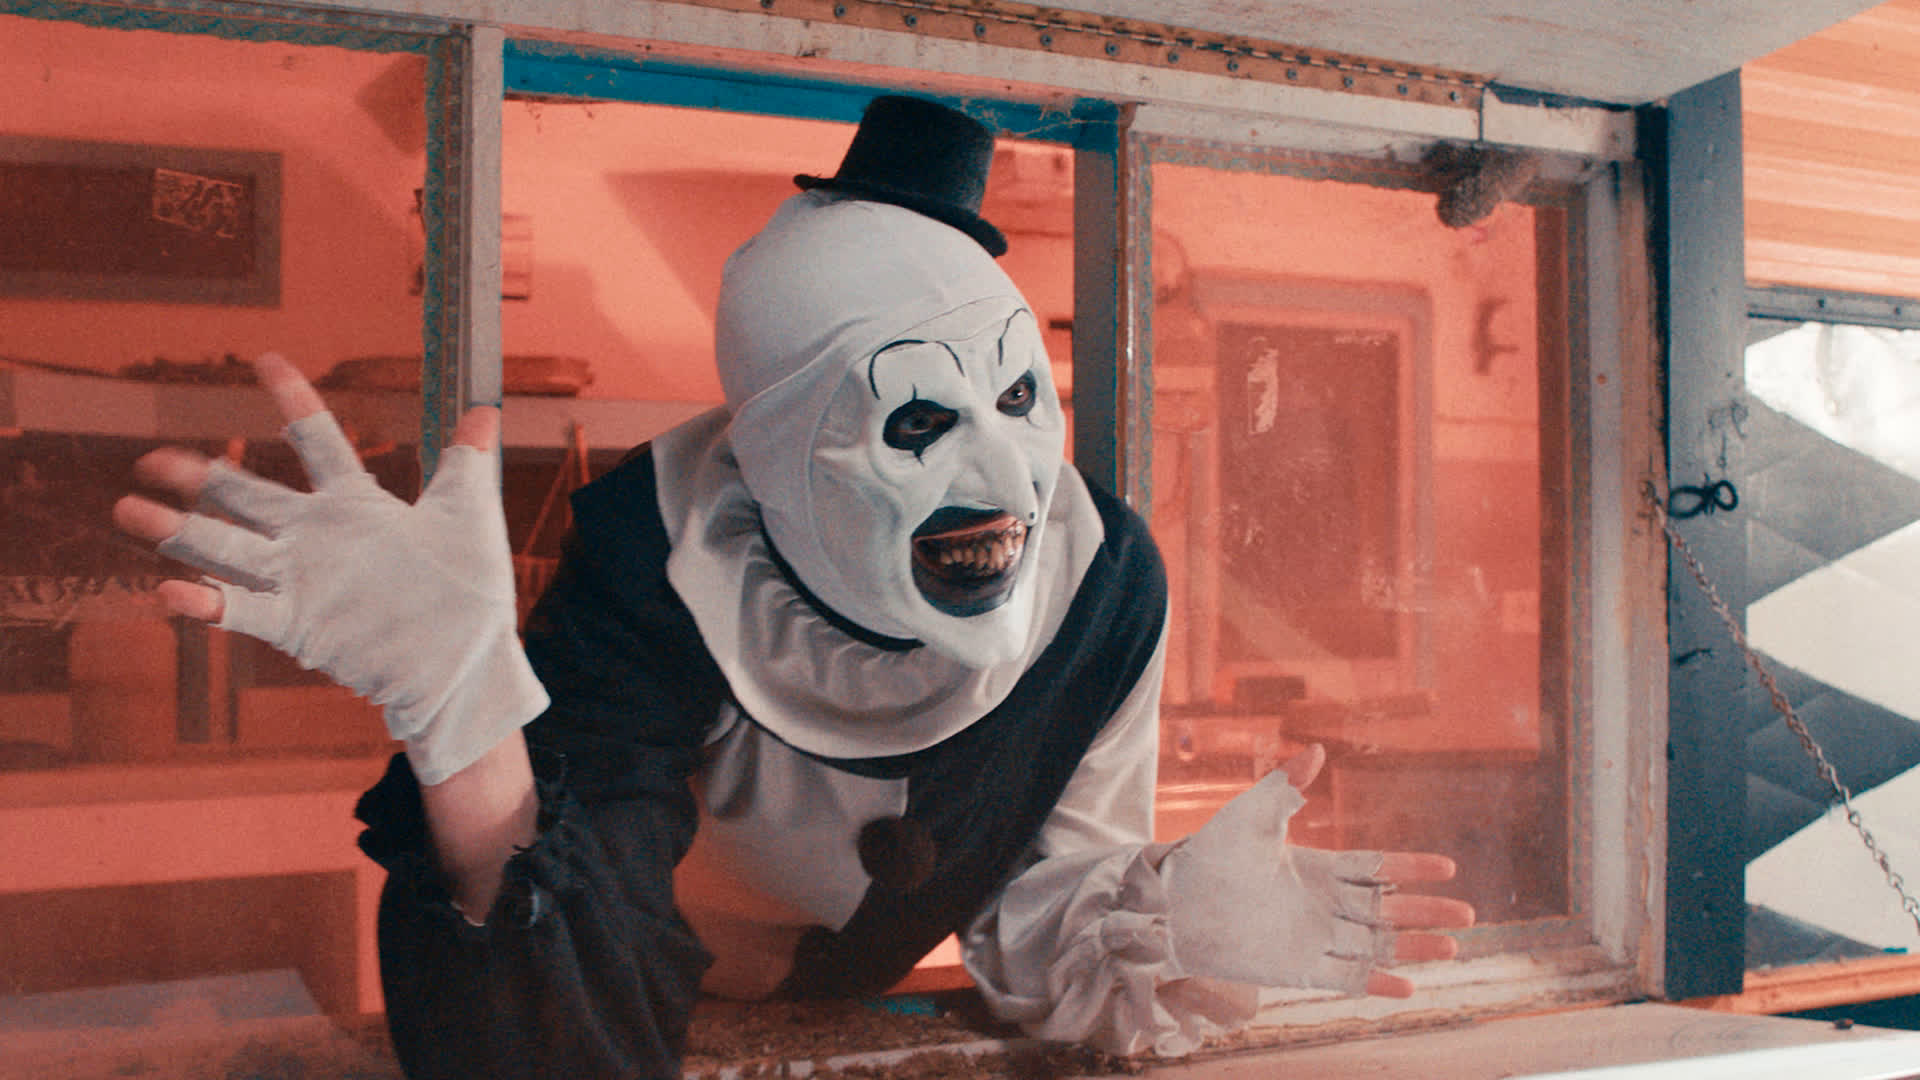 David Howard Thornton as Art the Clown in Terrifier 2.